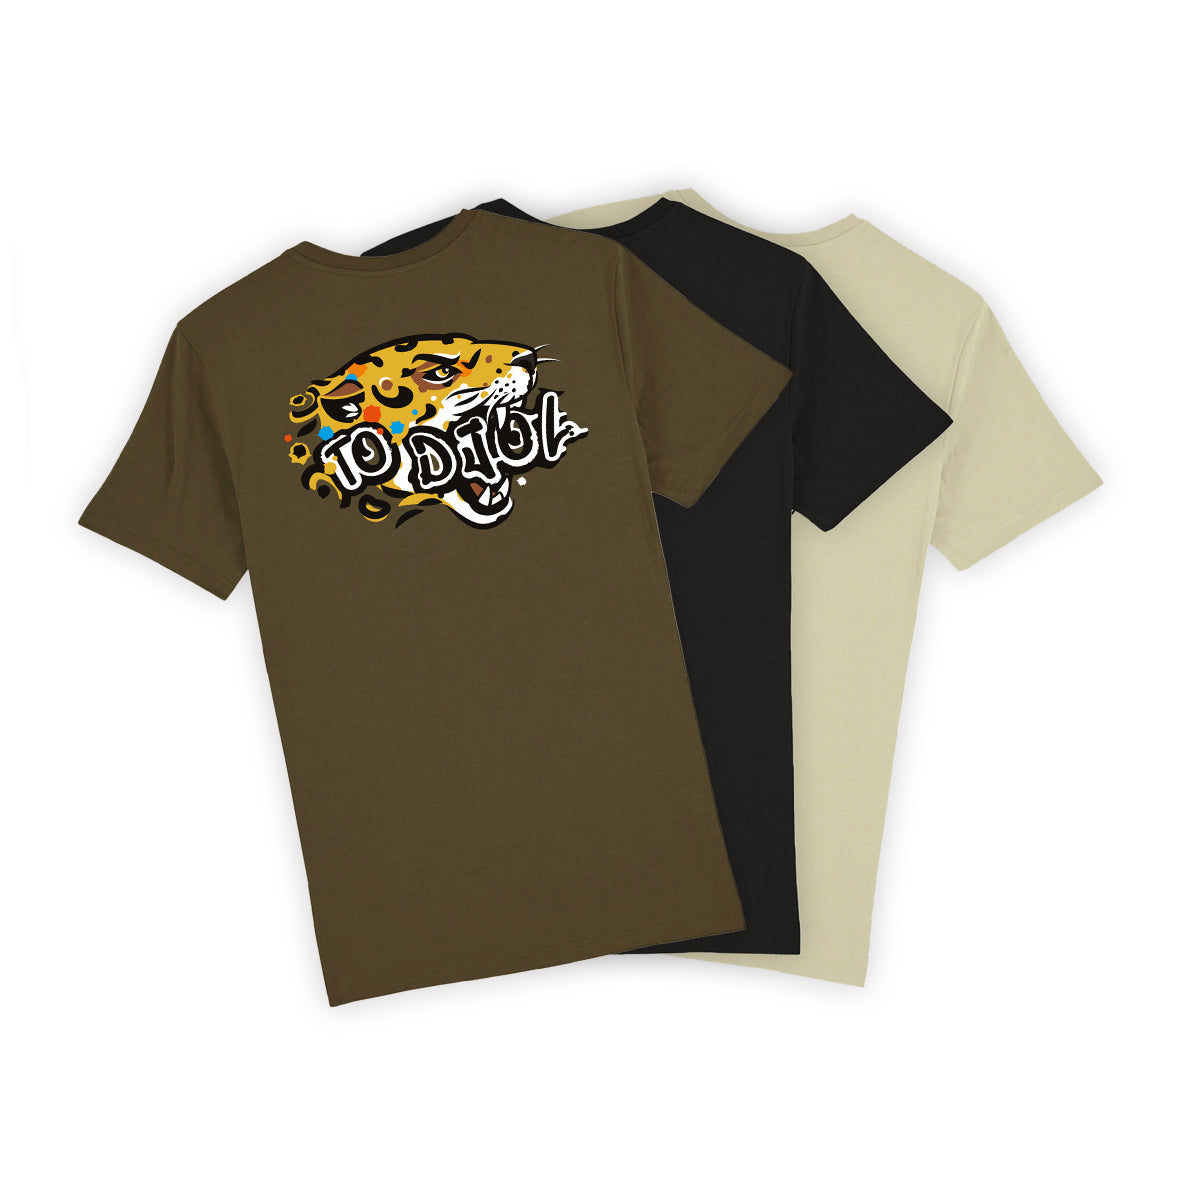 bat wey - T-shirt Homme To djol Jaguar - Guyane - 3 coloris Kaki - Noir - Sable